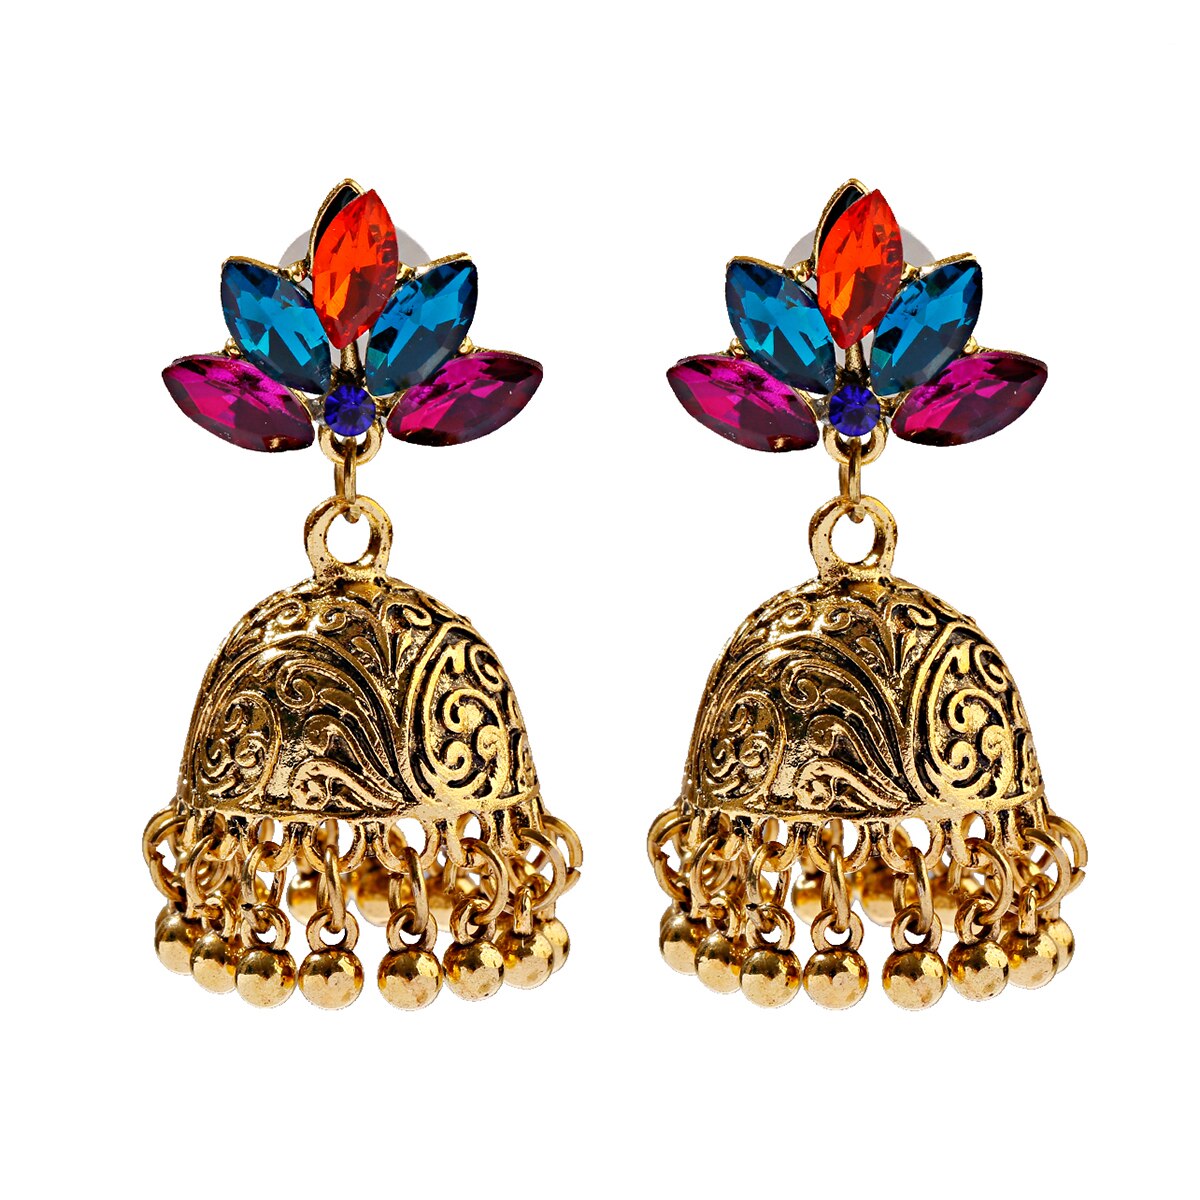 Luxury-Indian-Jhumka-Earrings-For-Women-Retro-Flower-Carved-CZ-Big-Bells-Tibetan-Earrings-Oorbellen-1005004770824397-7